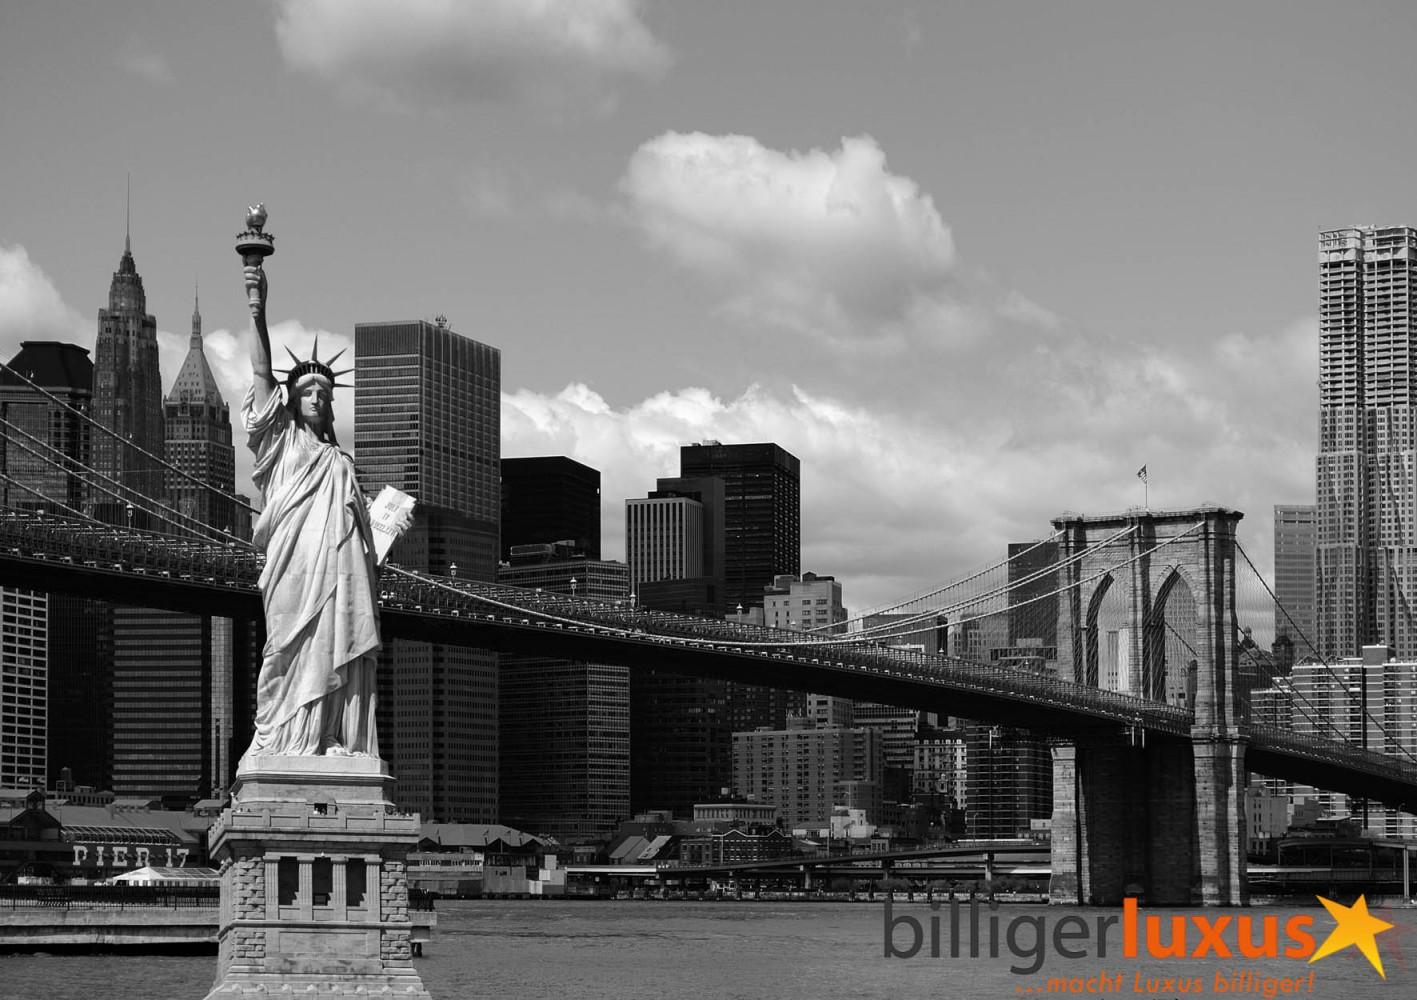 Wall mural wallpaper Brooklyn Bridge Statue of Liberty New York black white photo 360 cm x 254 cm / 3.94 yd x 2.78 yd